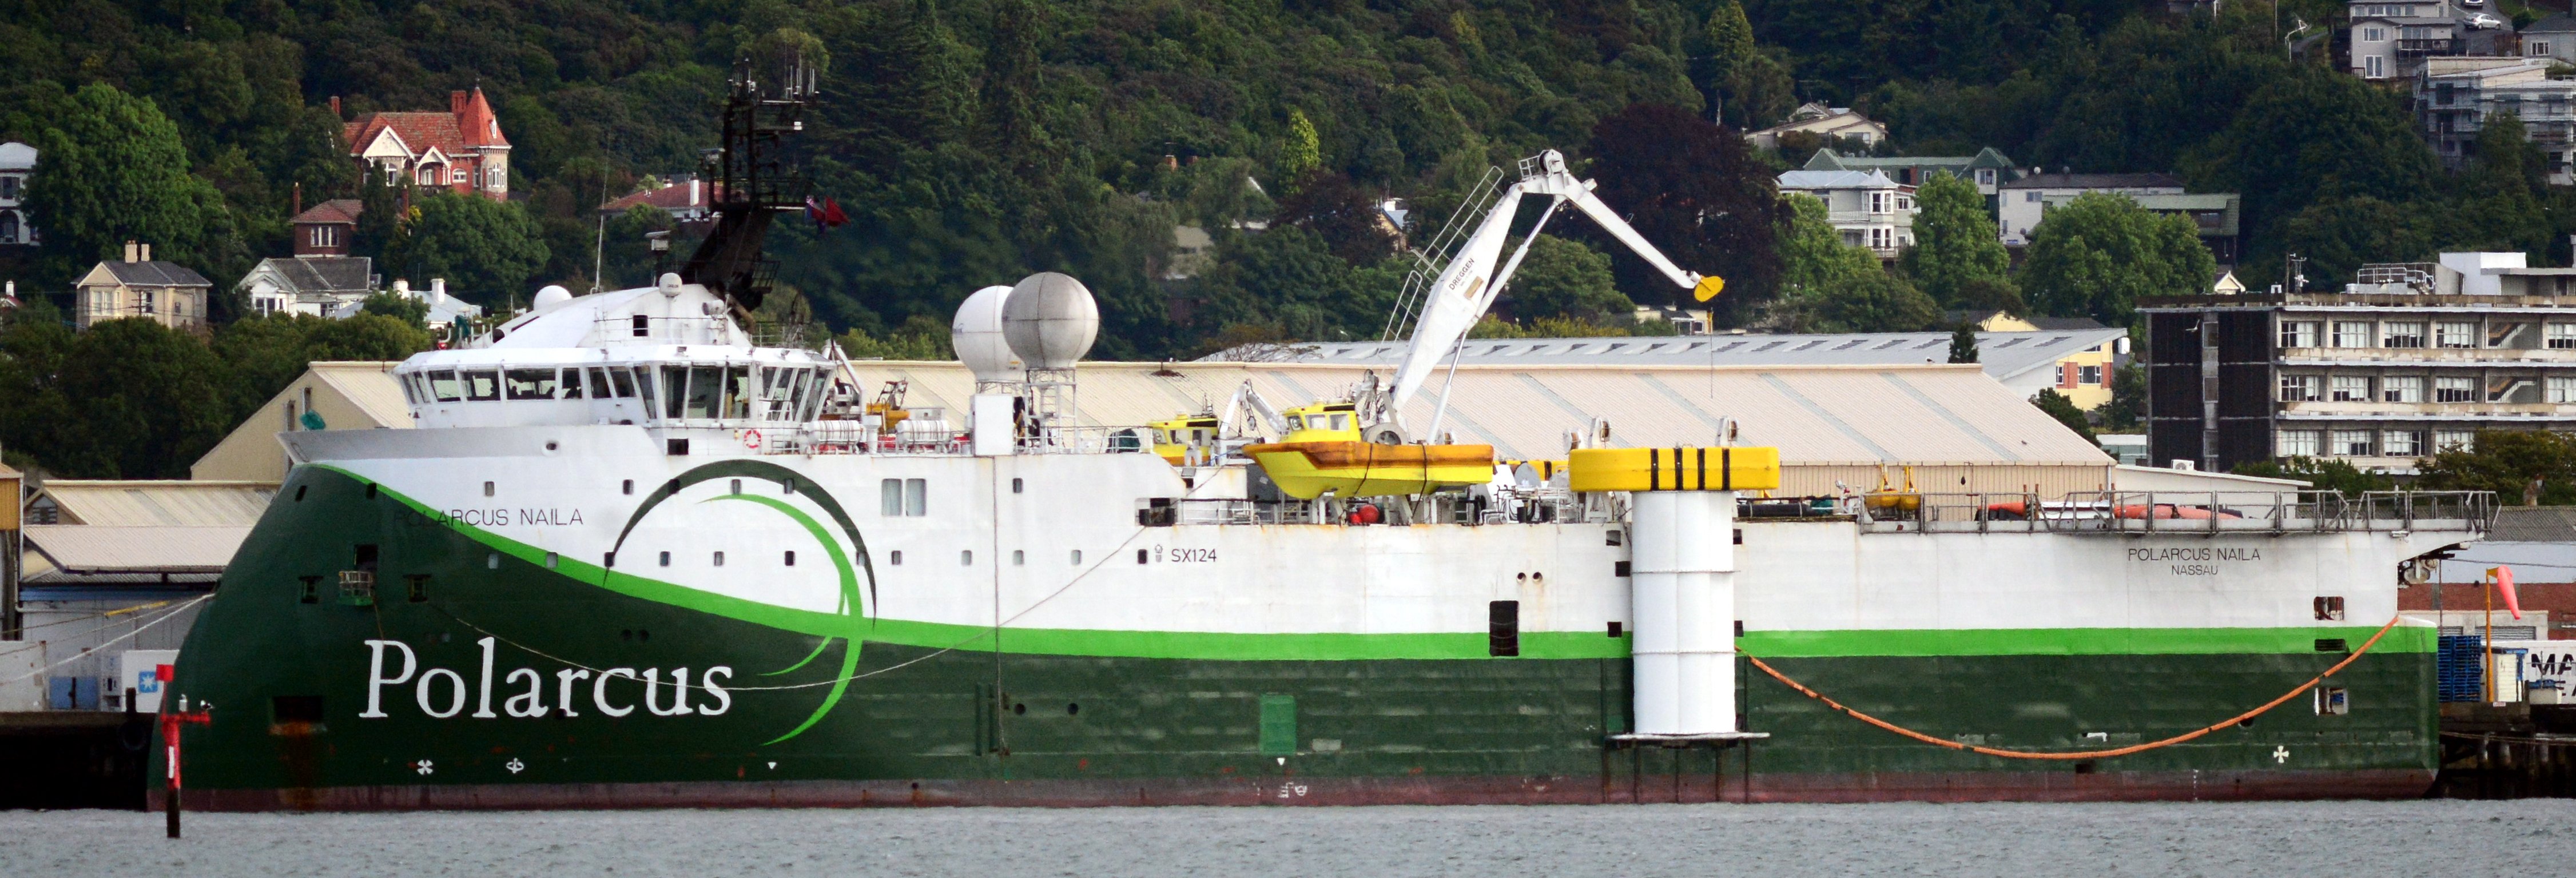 Hydrographic survey vessel Polarcus in Dunedin in 2015, alongside the Fryatt St wharf in the...